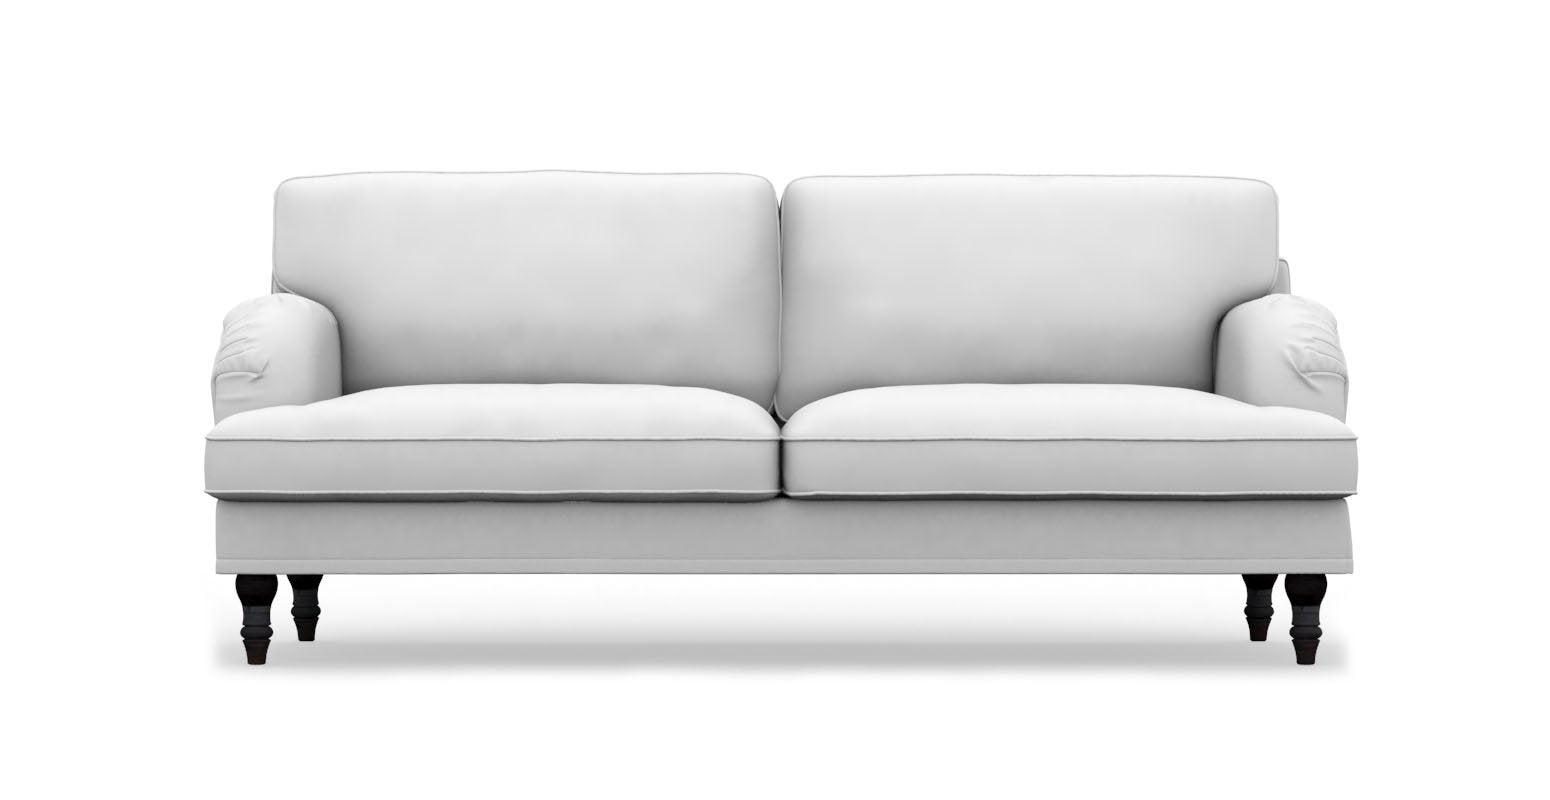 STOCKSUND 3 Seat IKEA Sofa Cover